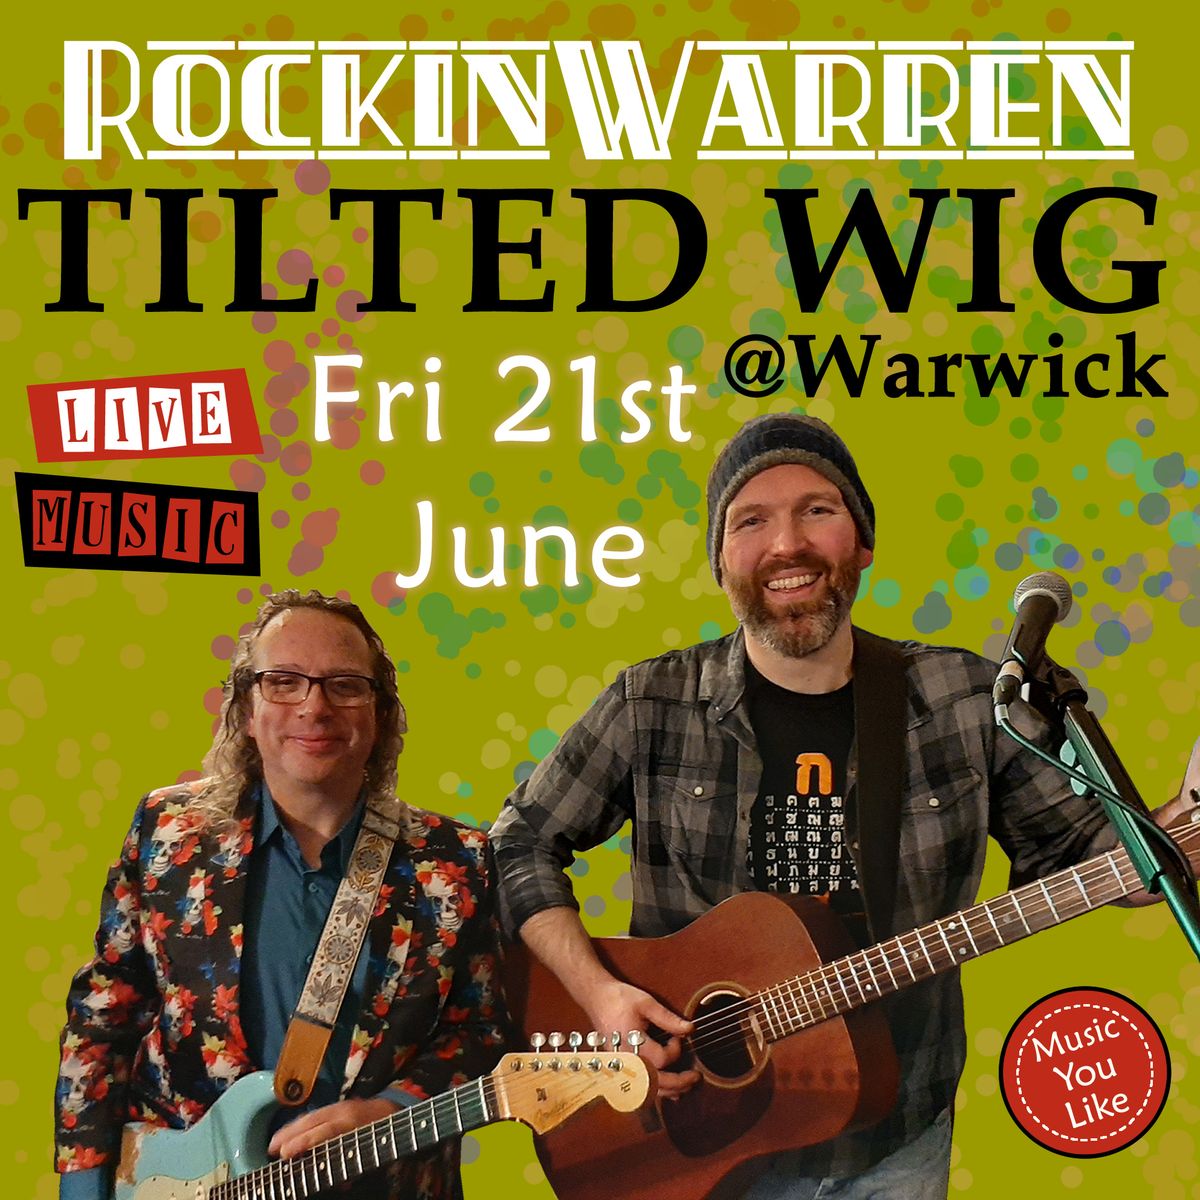 RockinWarren LIVE Friday 21st June @ The Tilted Wig - Warwick